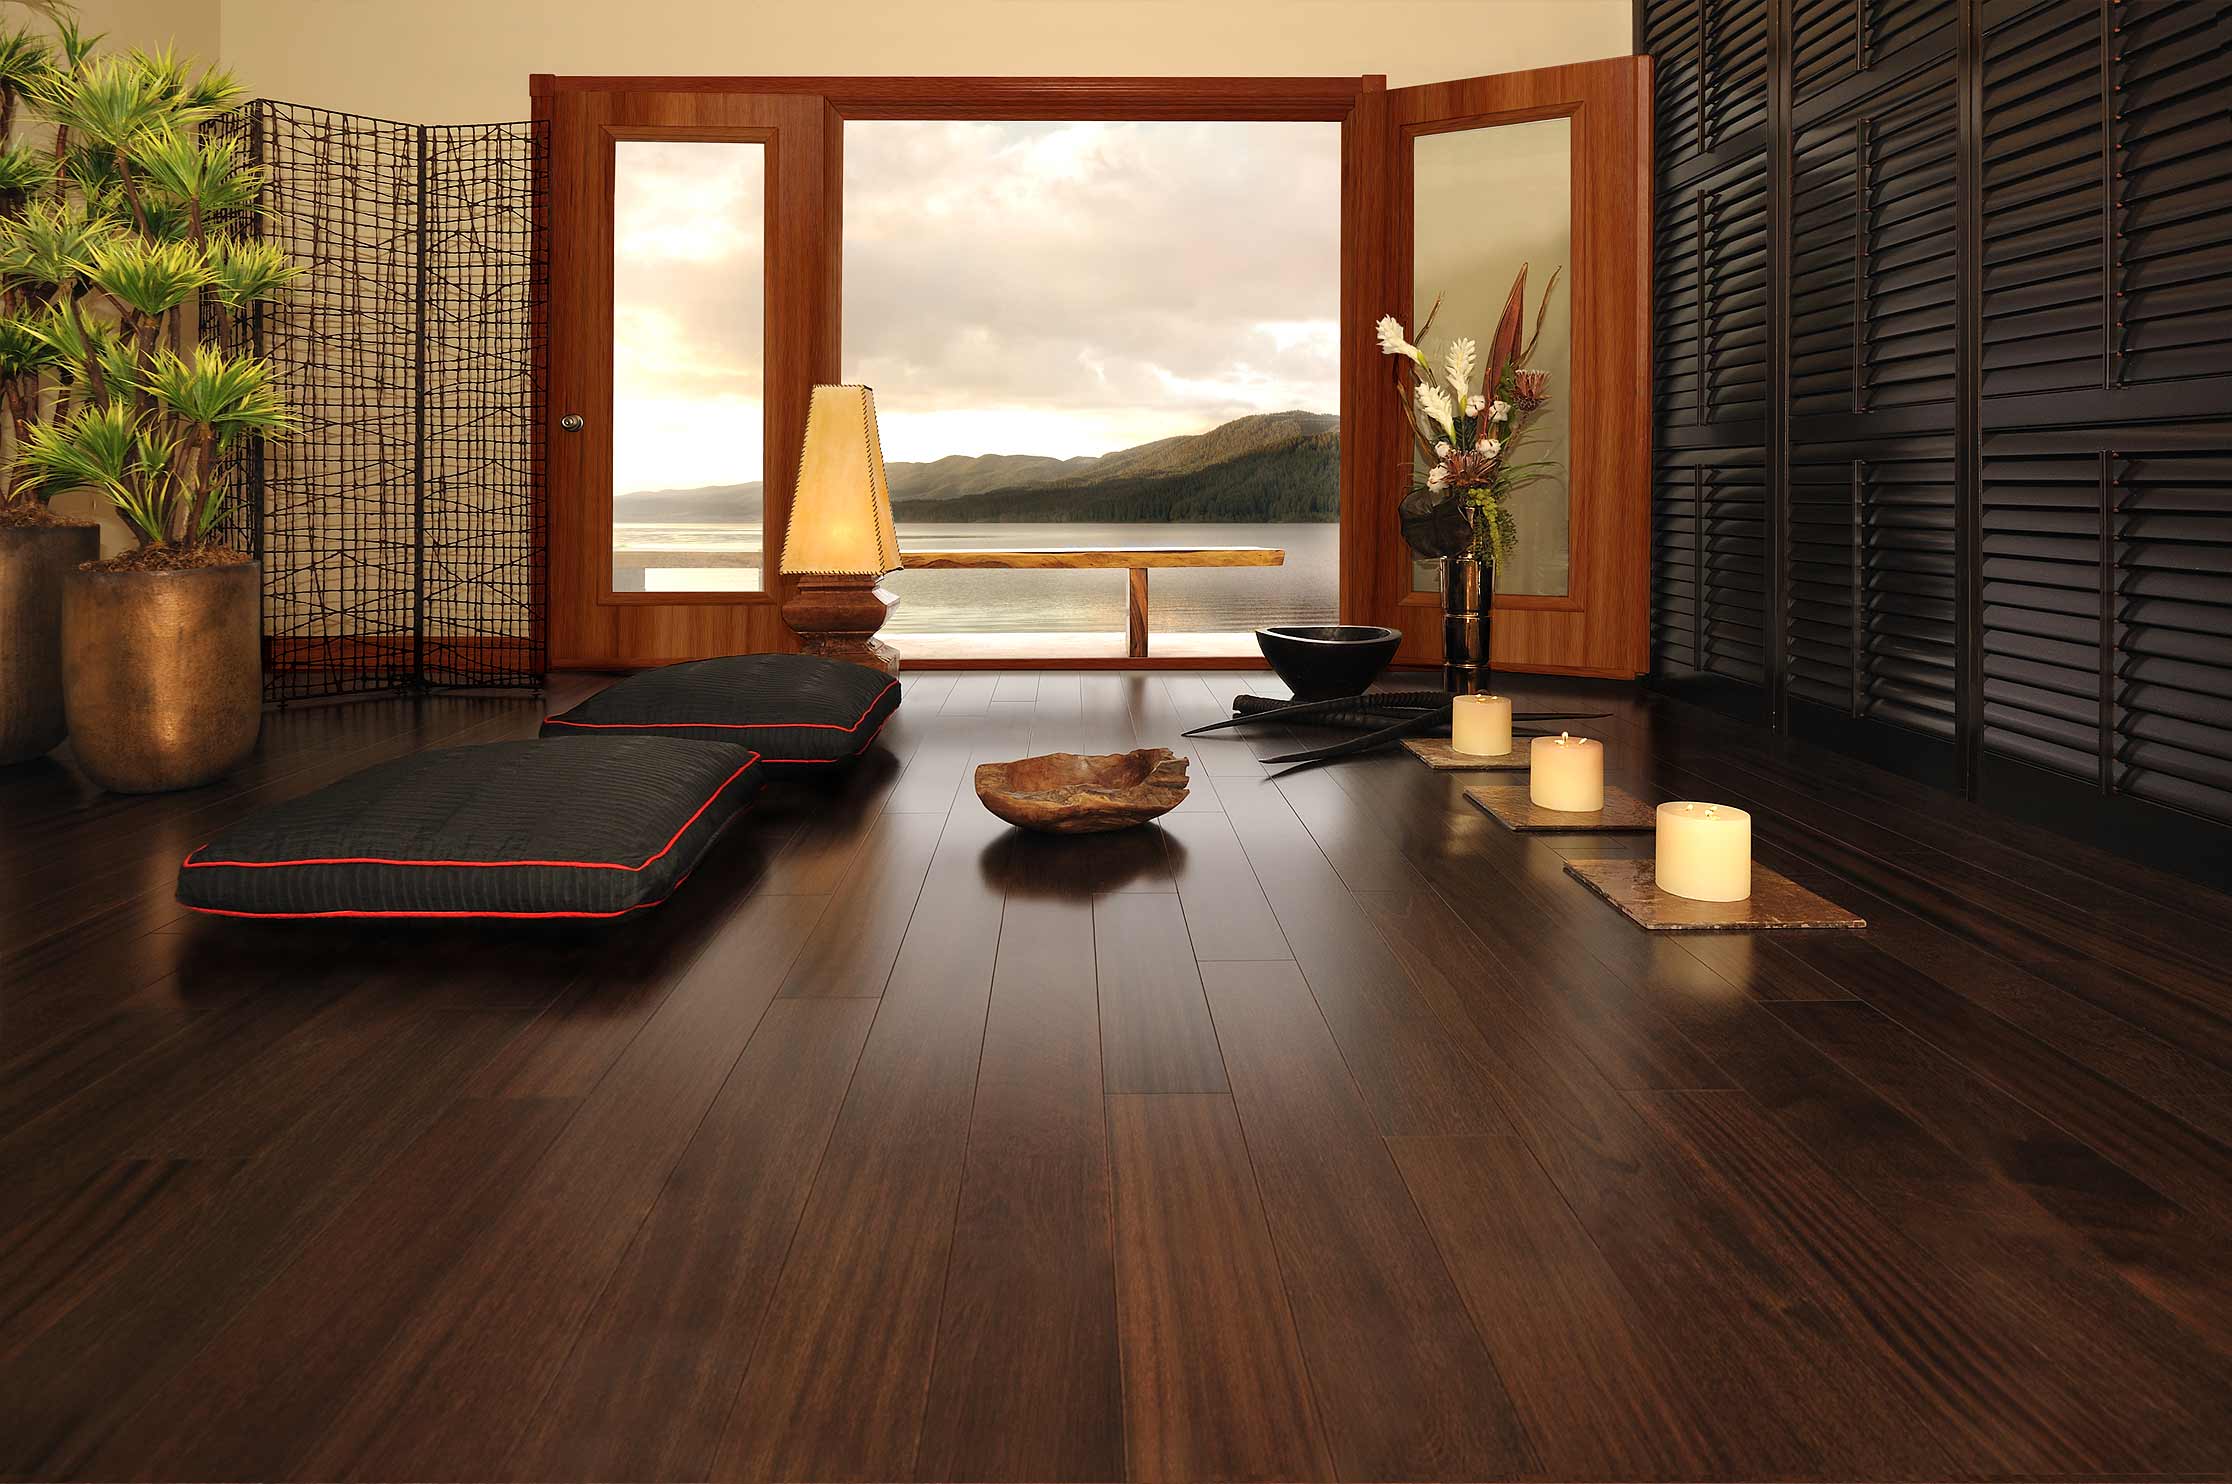 Gotfloor Carpet And Flooring, Interior Design Hardwood Floors